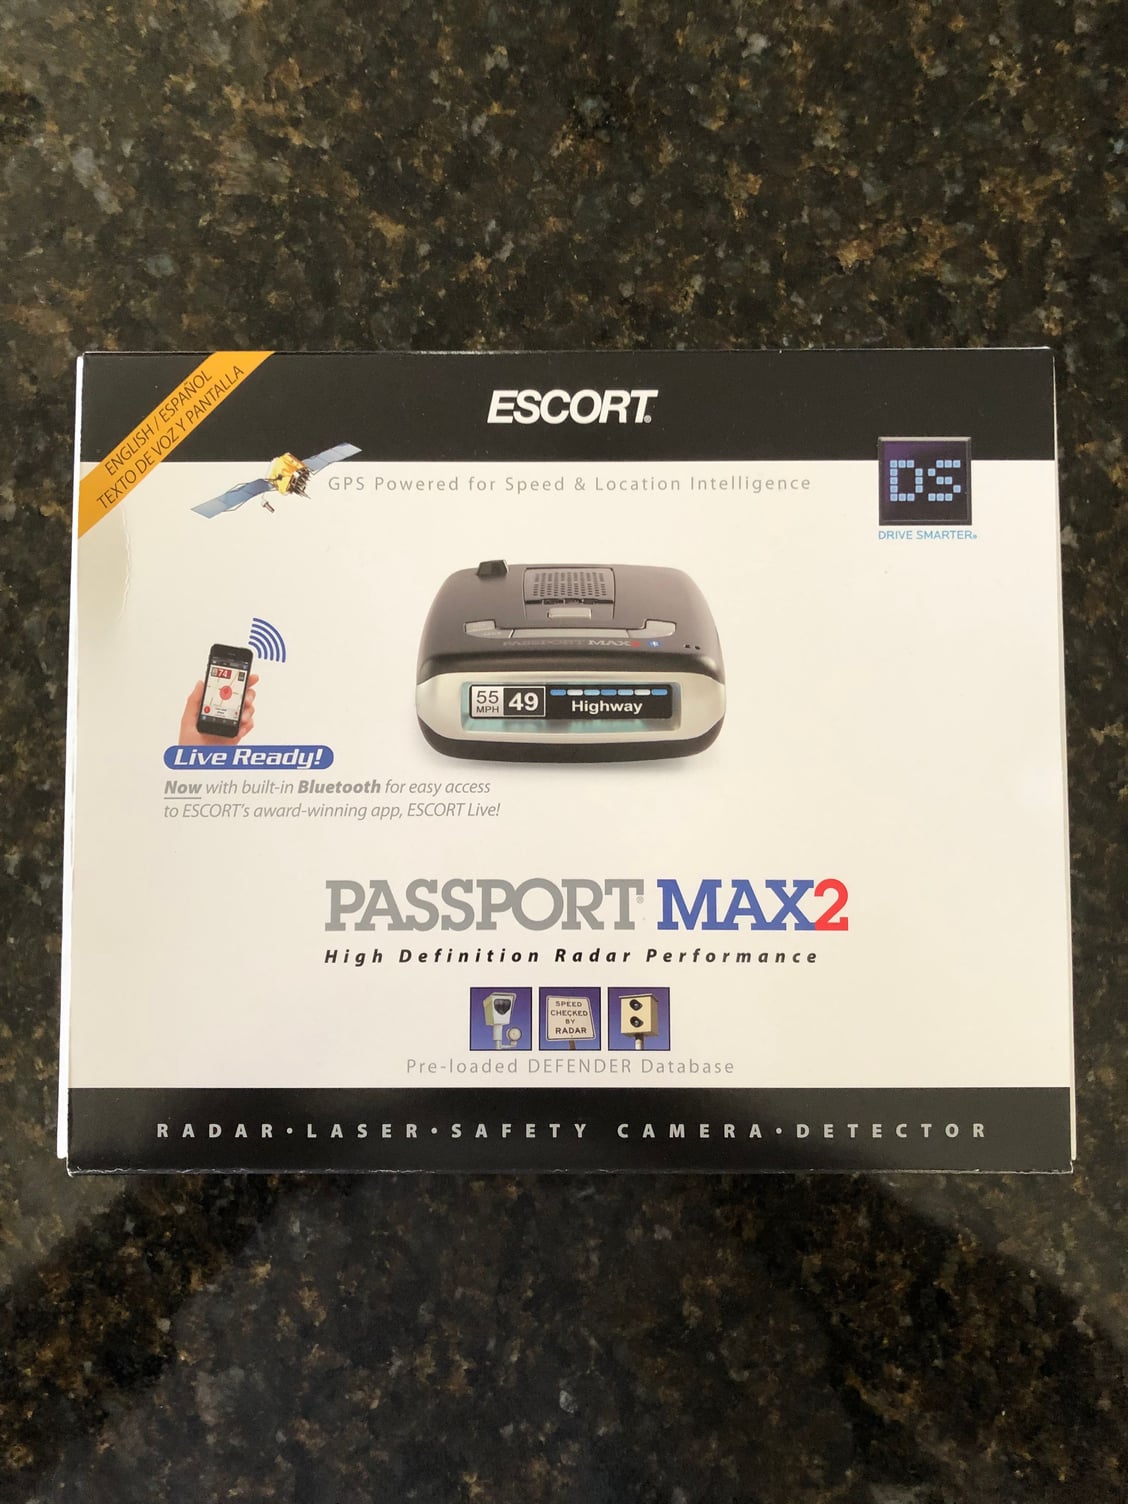 Audio Video/Electronics - FS: Escort Passport Max2 Radar Detector - Used - Deerfield, IL 60015, United States